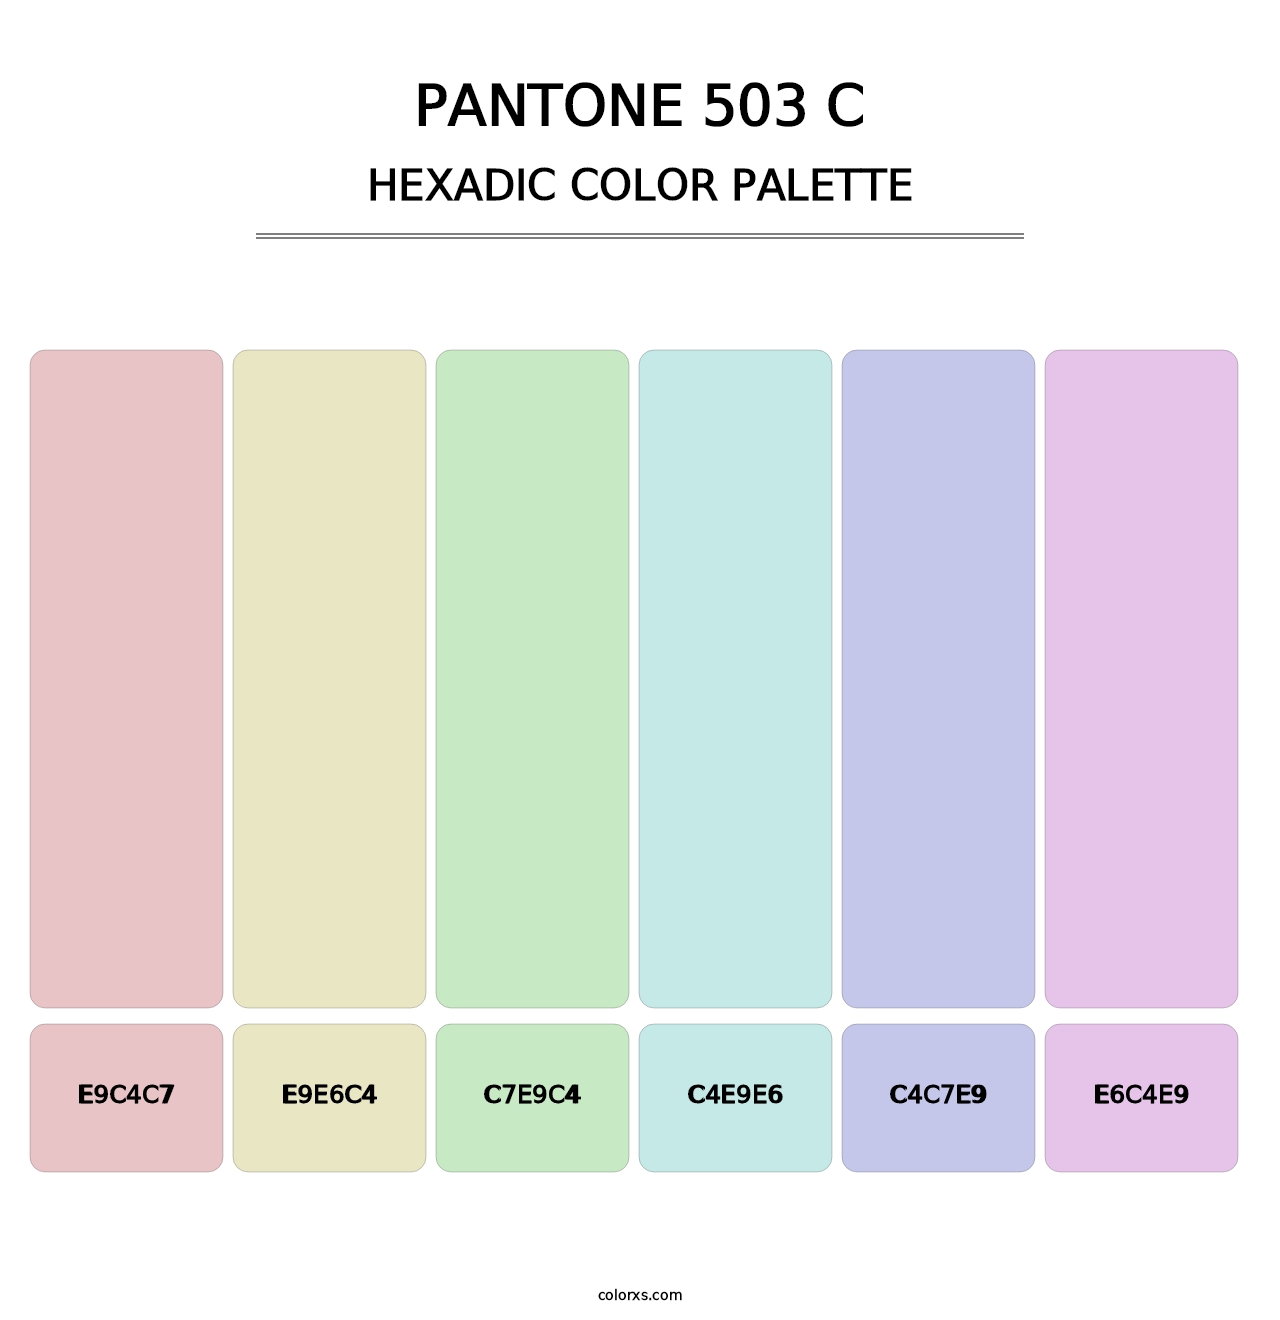 PANTONE 503 C - Hexadic Color Palette